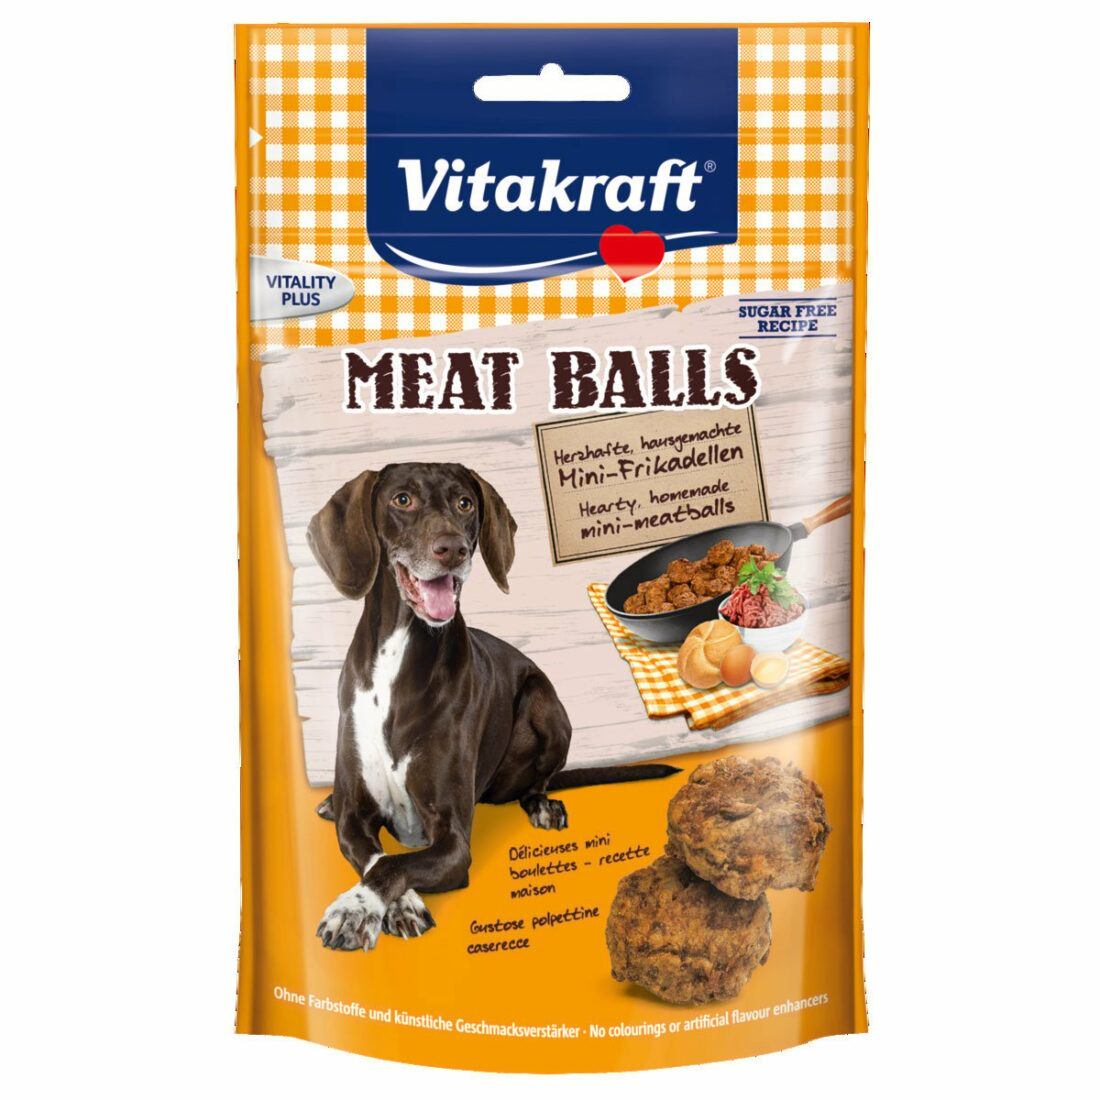 Vitakraft Meat Balls 3 ×